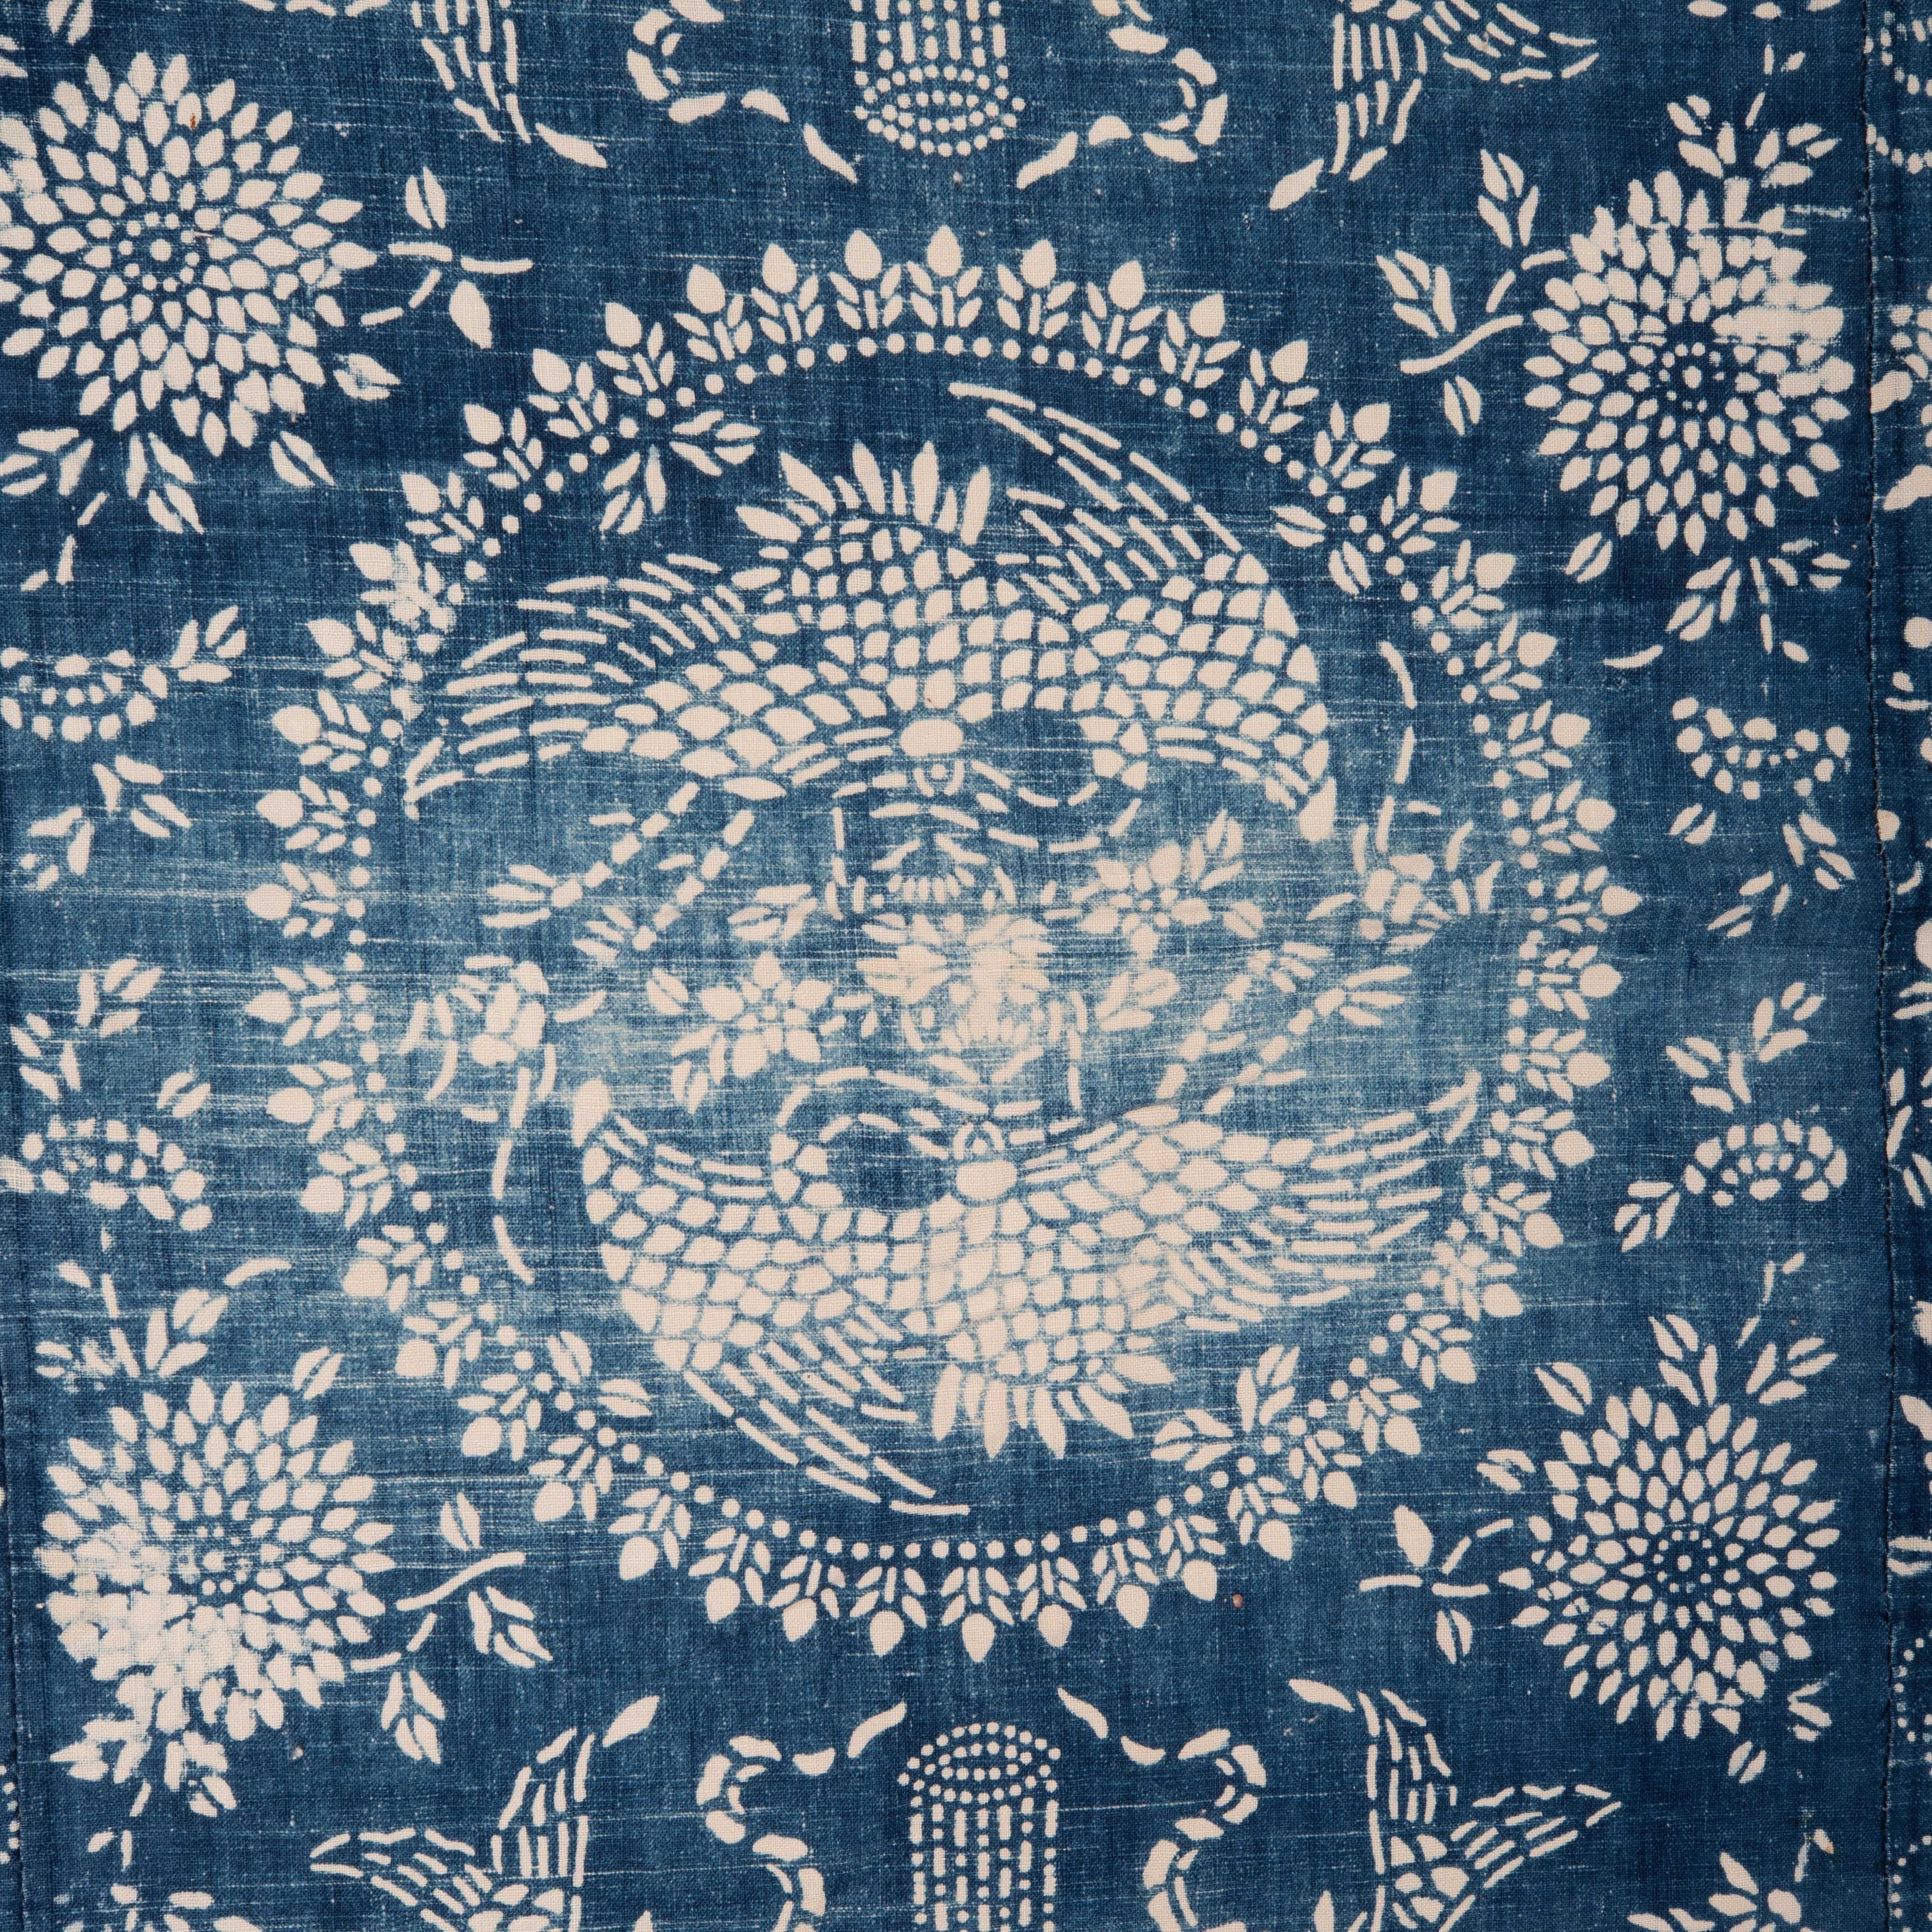 Tribal Vintage Chinese Indigo Batik Cover